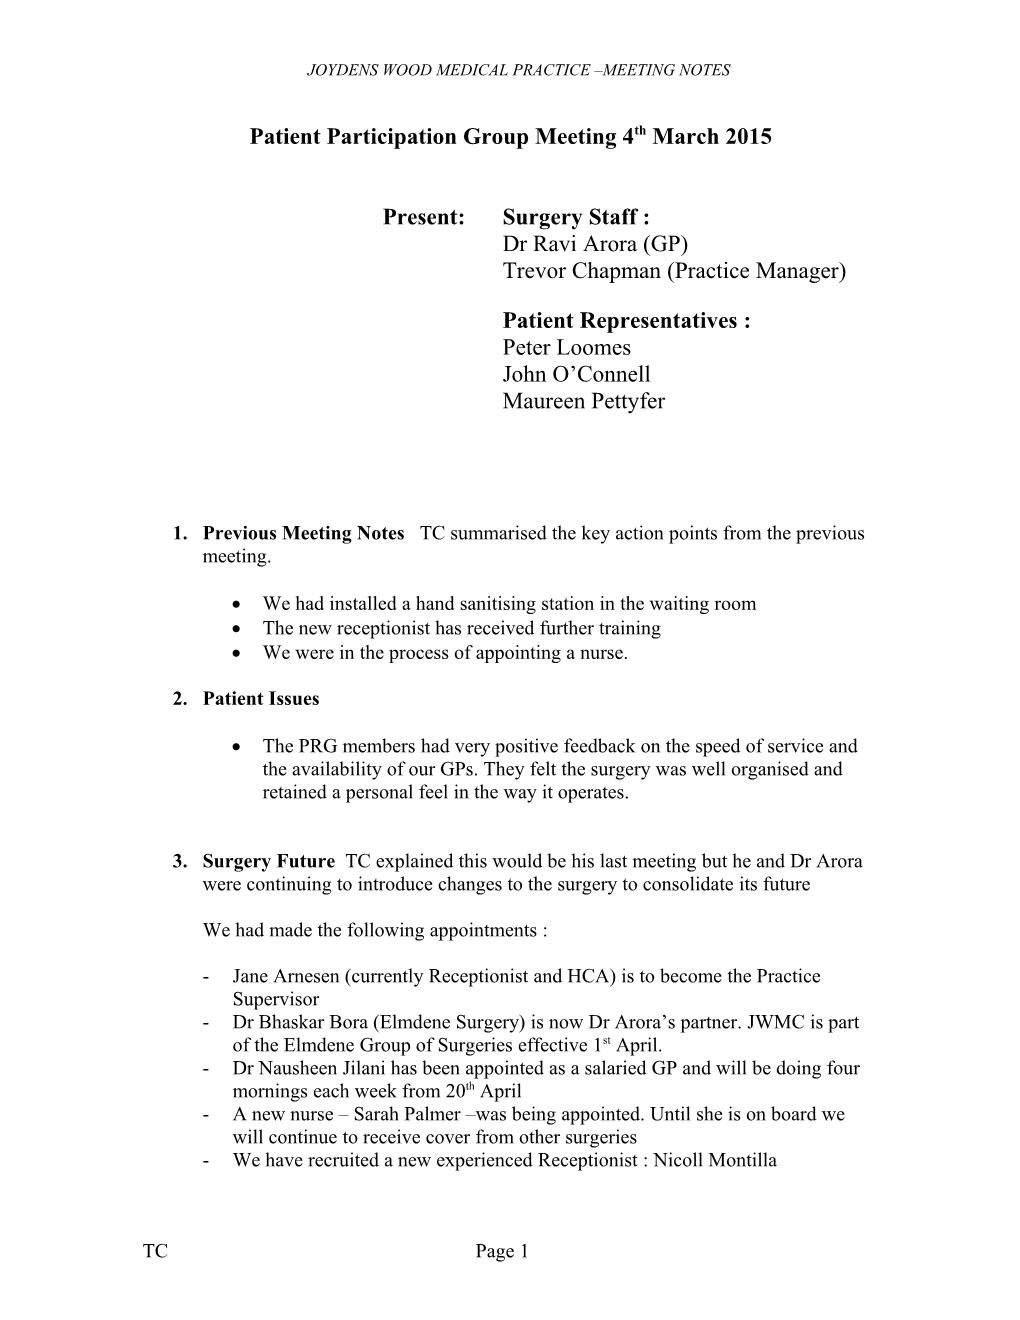 Joydens Wood Medical Practice Meeting Notes